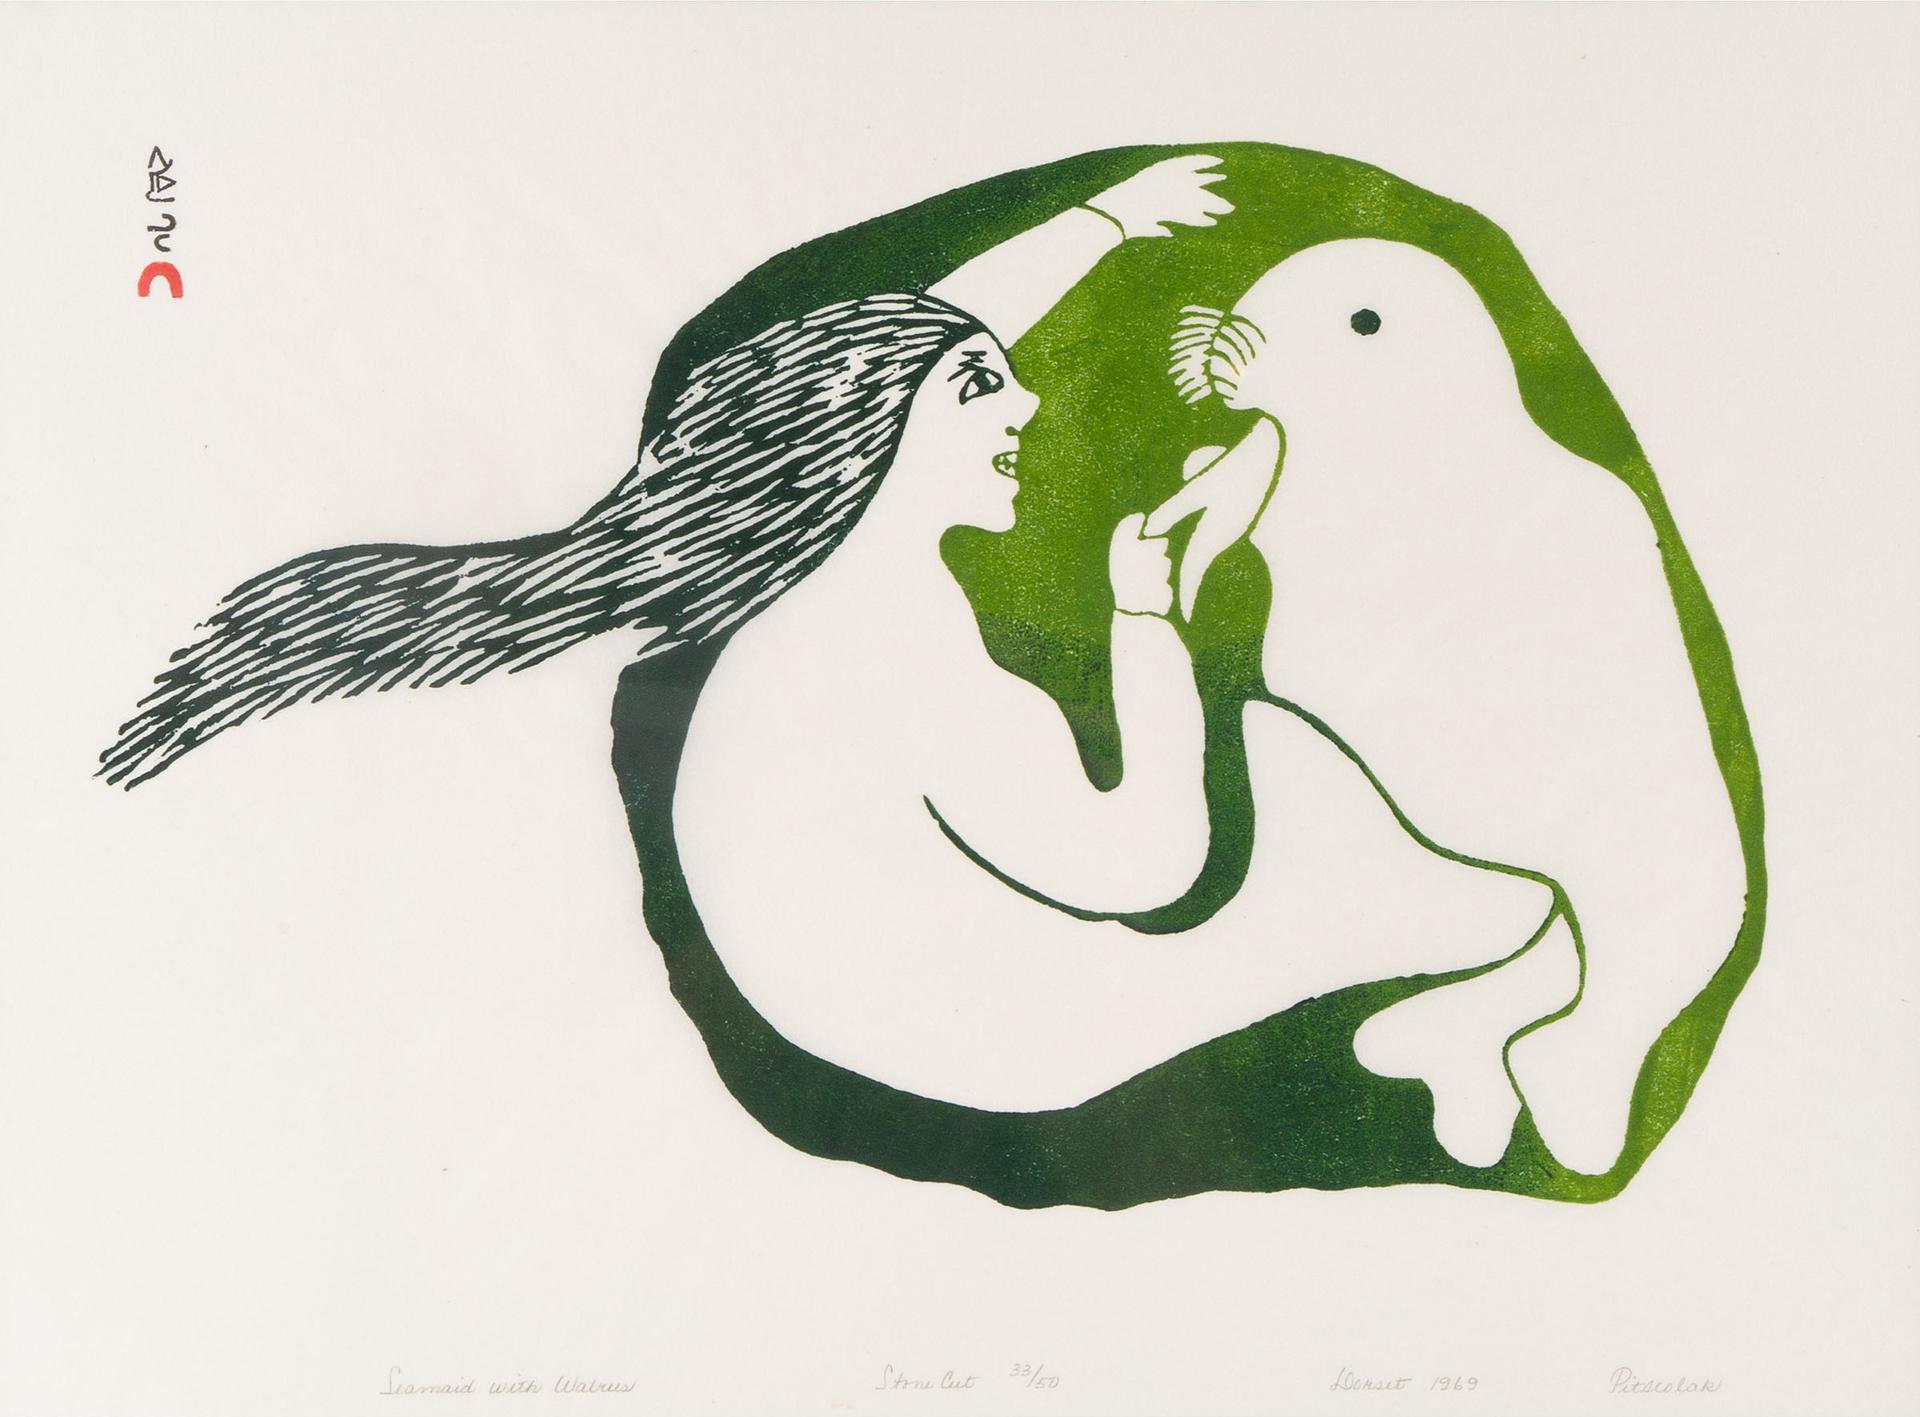 Pitseolak Ashoona (1904-1983) - Seamaid With Walrus